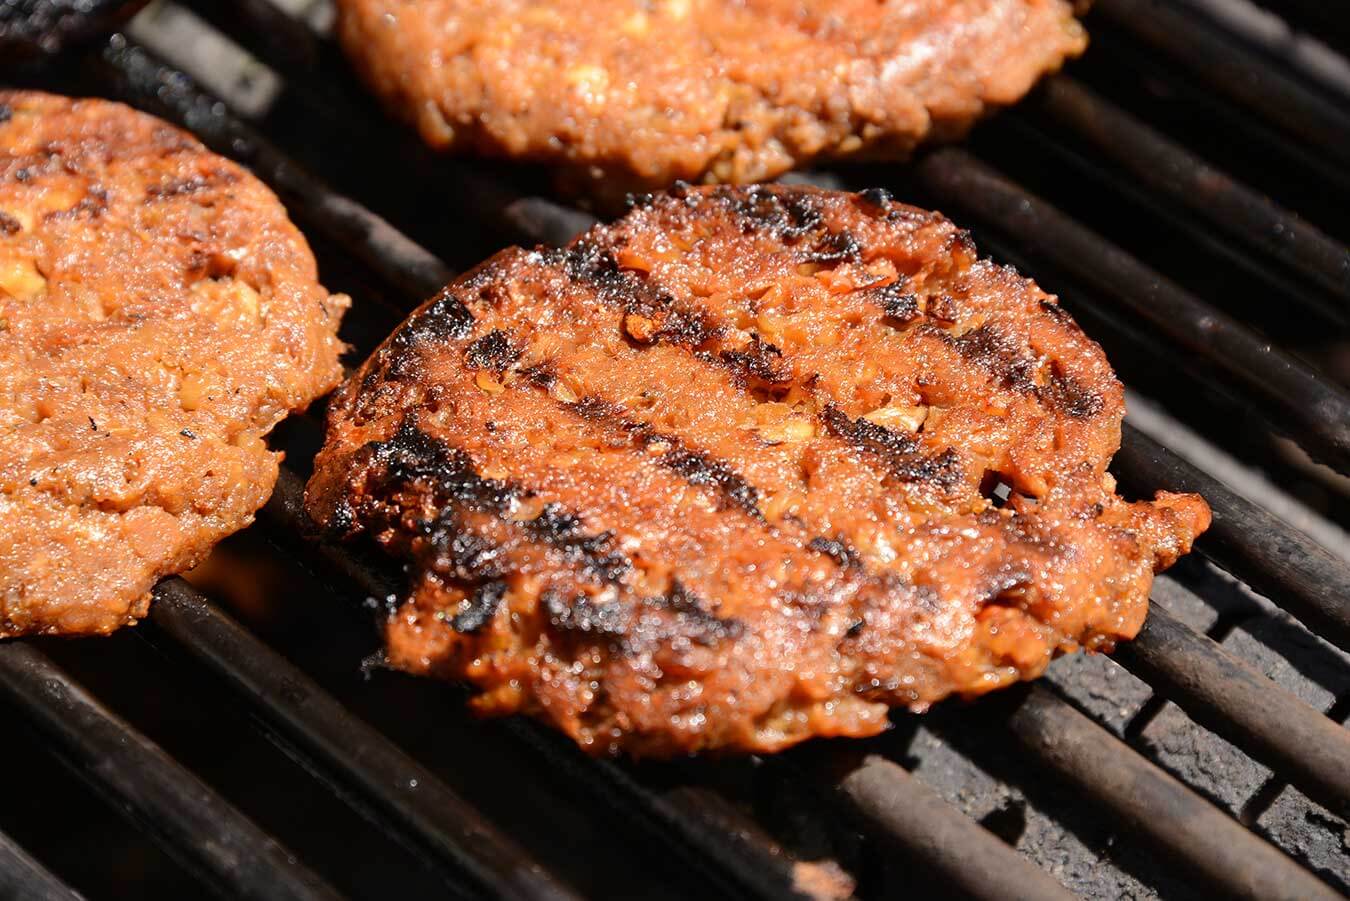 vegan burgers on the grill